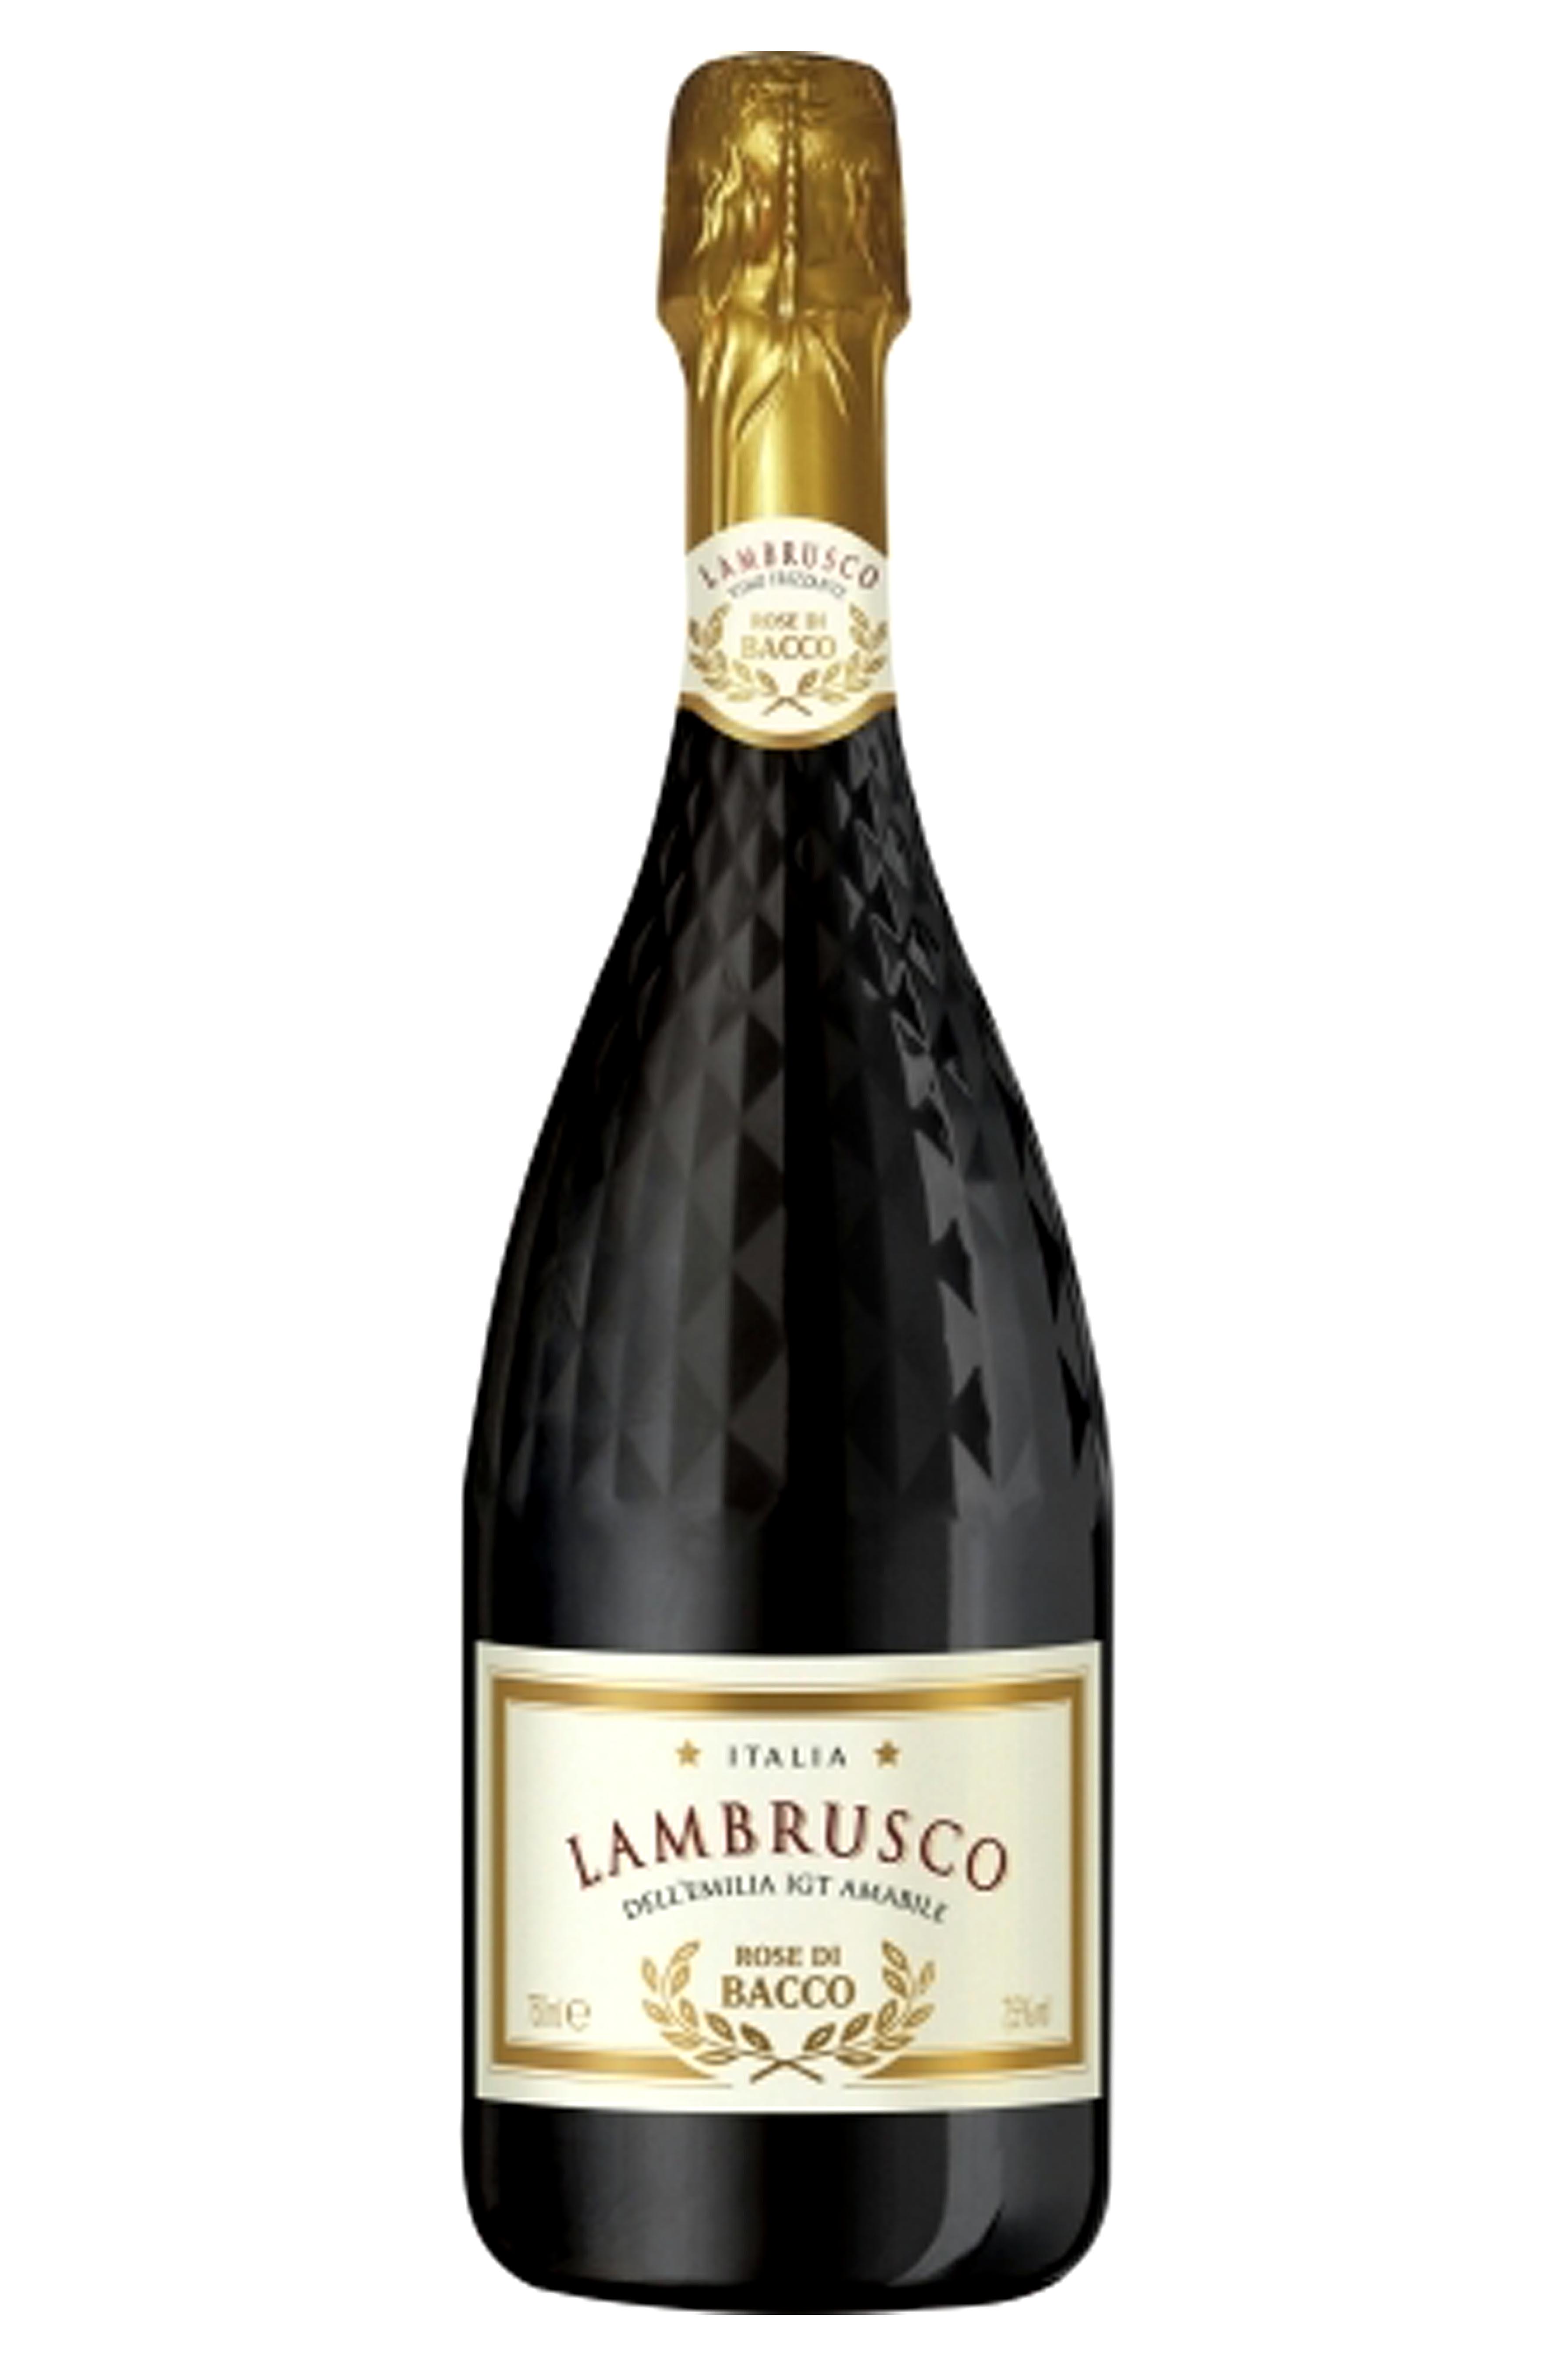 Lambrusco rosso wine